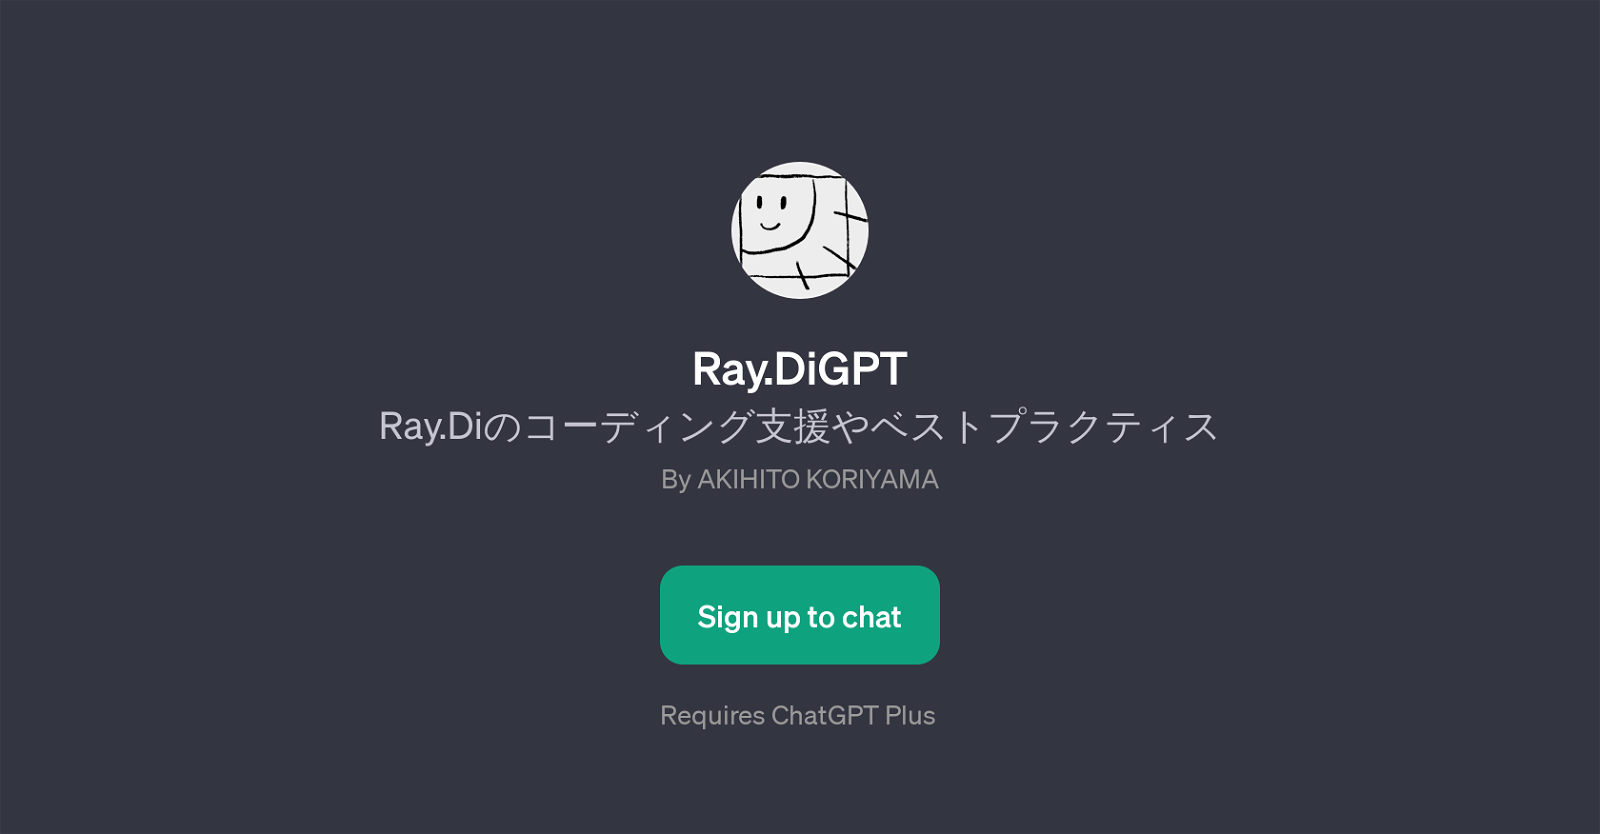 Ray.DiGPT website